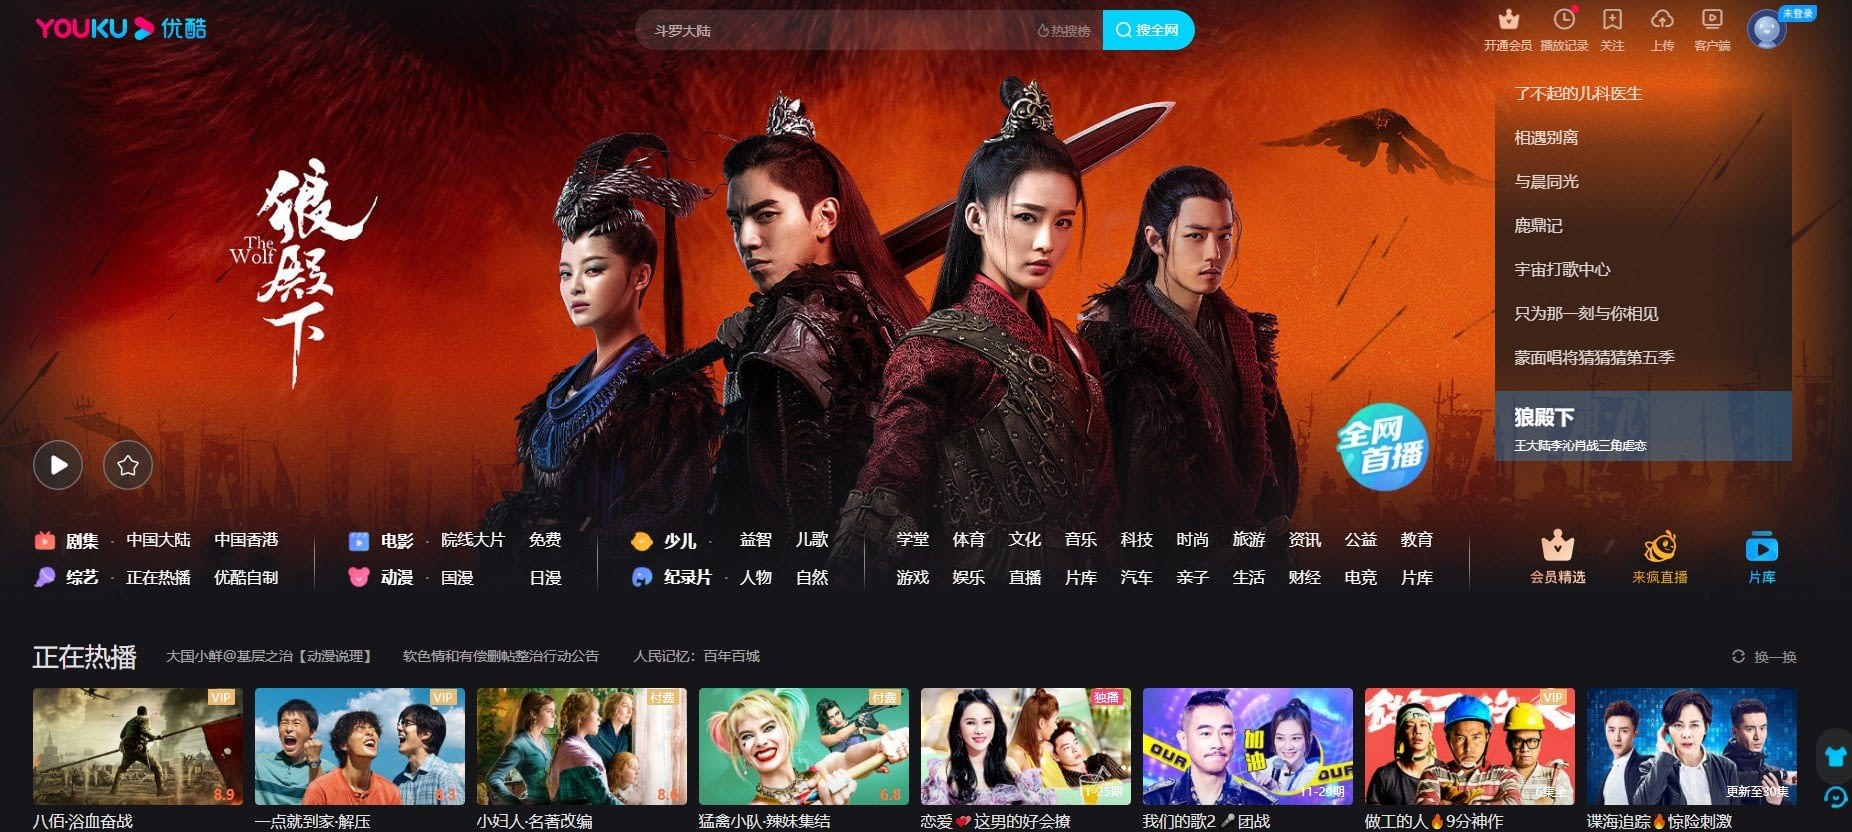 Alibaba owns Youku Long video platform